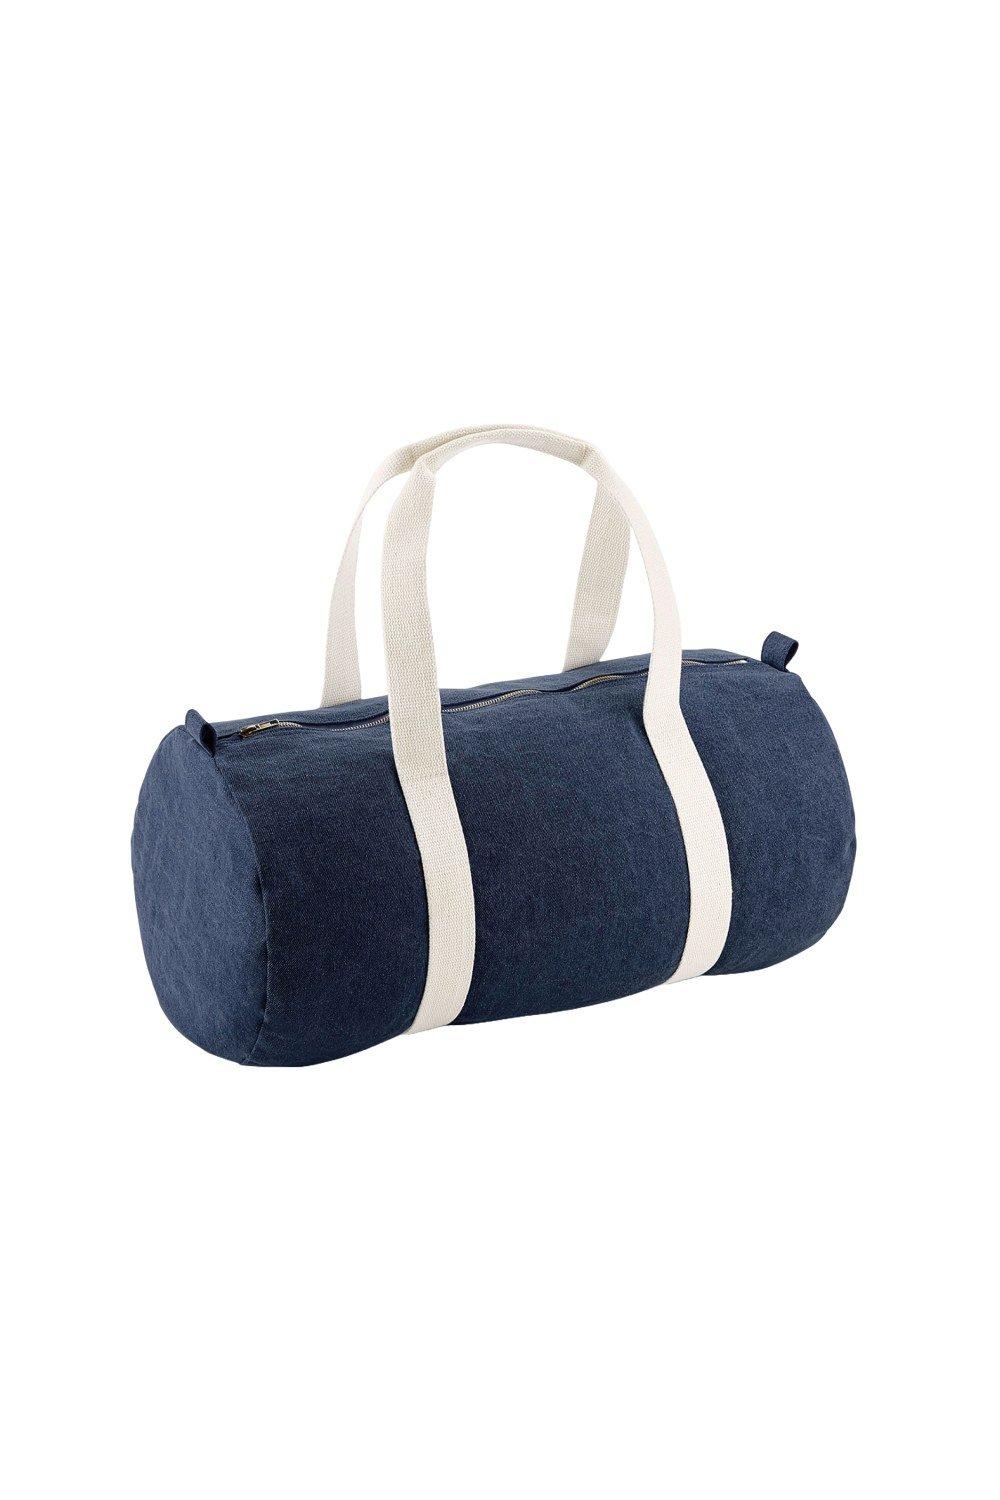 цена Джинсовая спортивная сумка Barrel Bagbase, синий